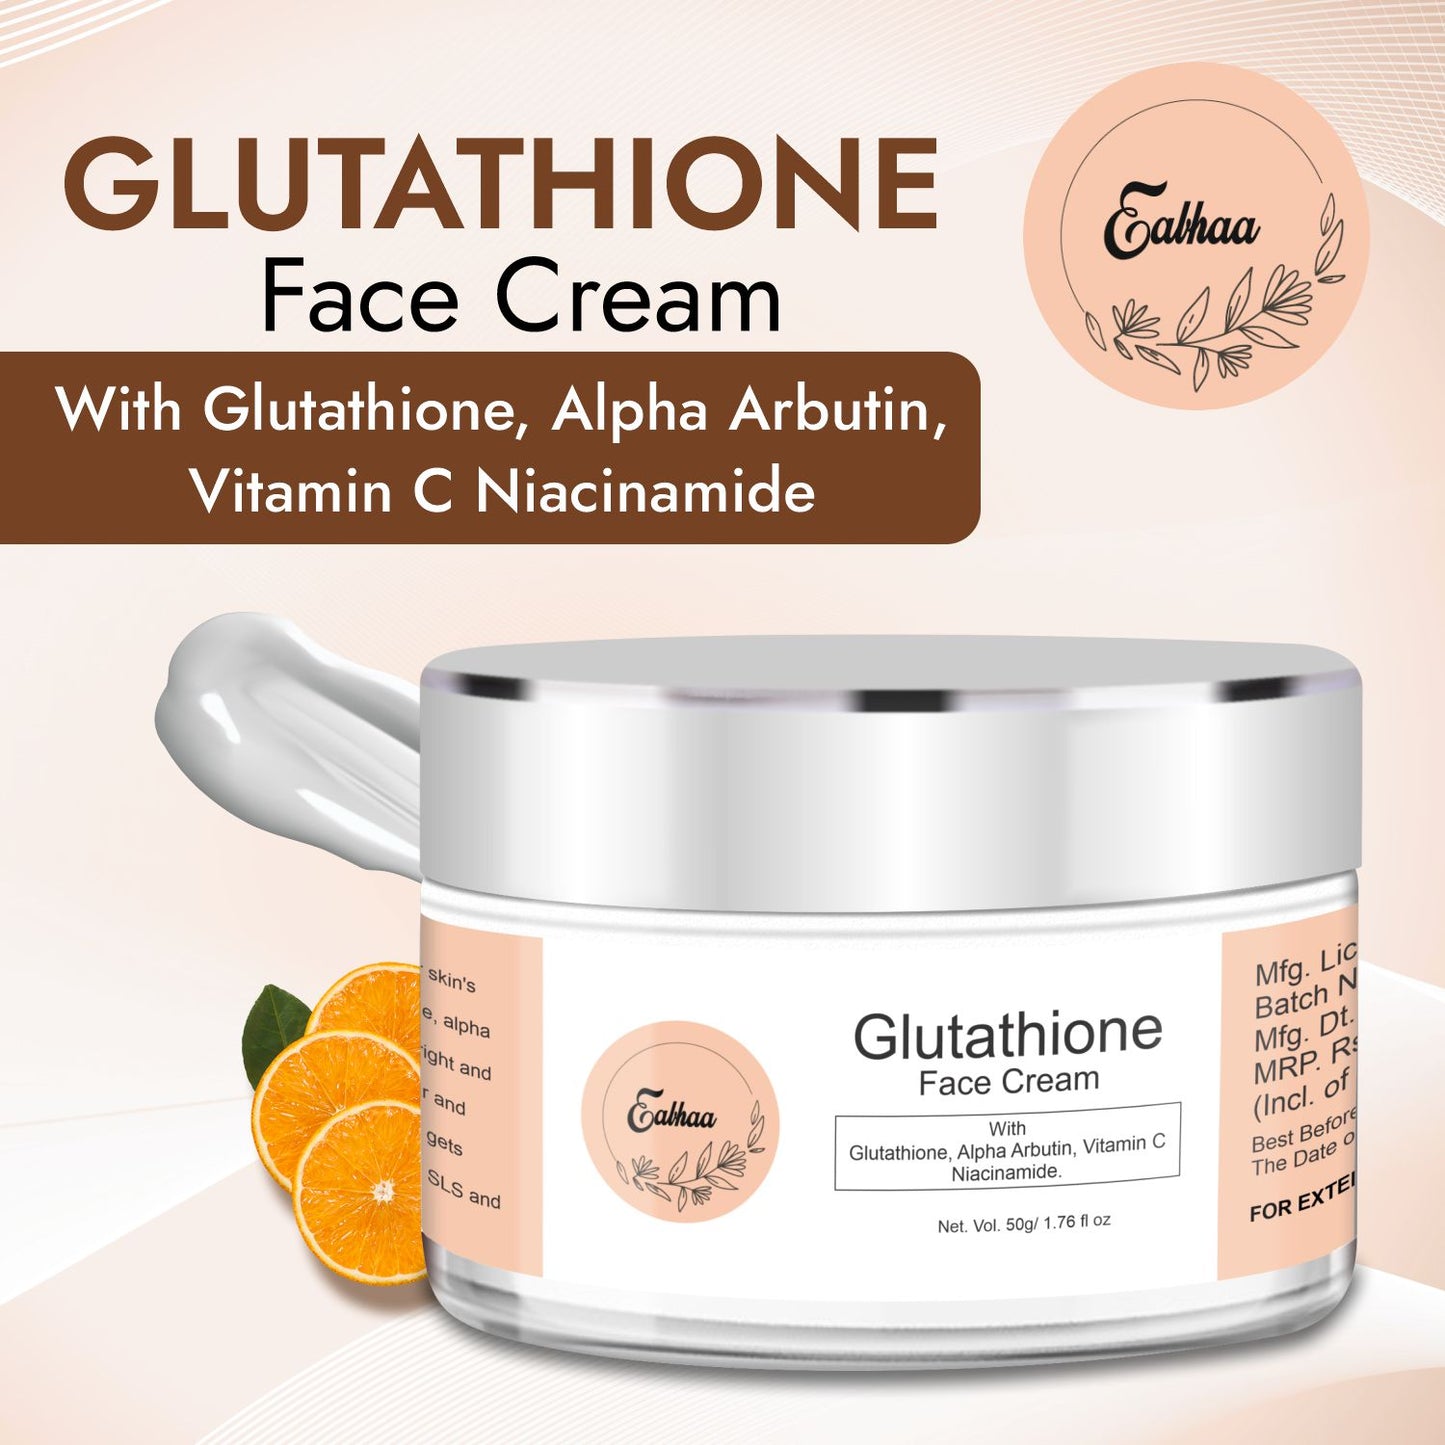 Face Cream Online Shop- Eabhaa Face Cream for Women And Men, Glutathione Face Cream, Vitamin C Cream for Skin Whitening (50g)